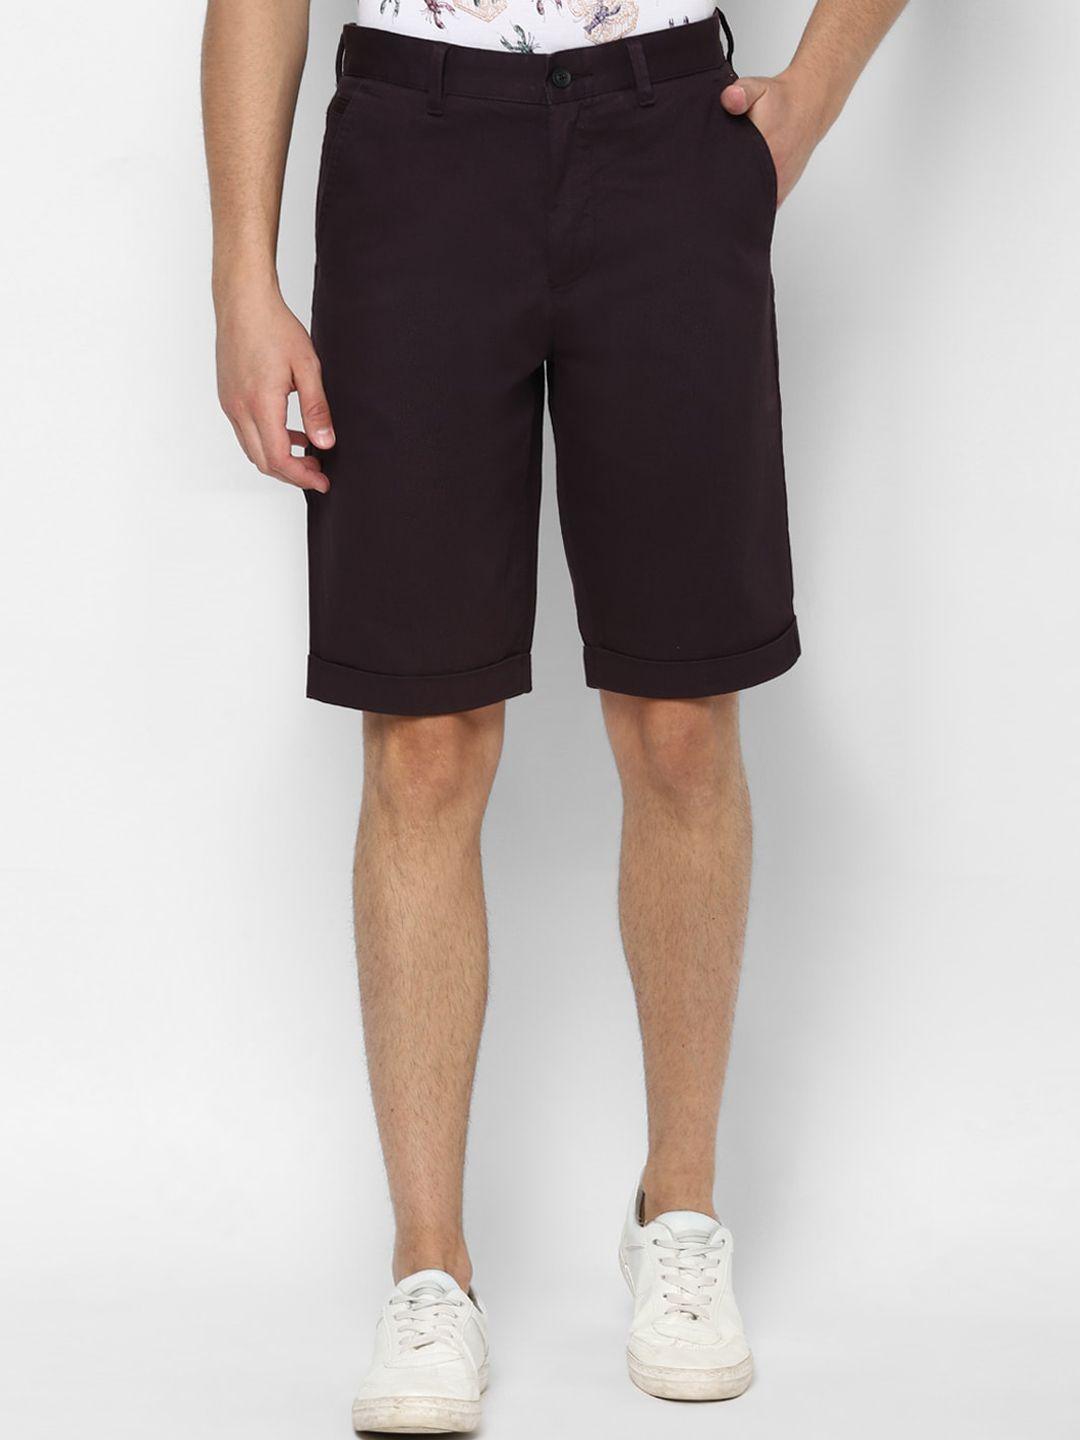 simon-carter-london-men-coffee-brown-solid-regular-fit-shorts